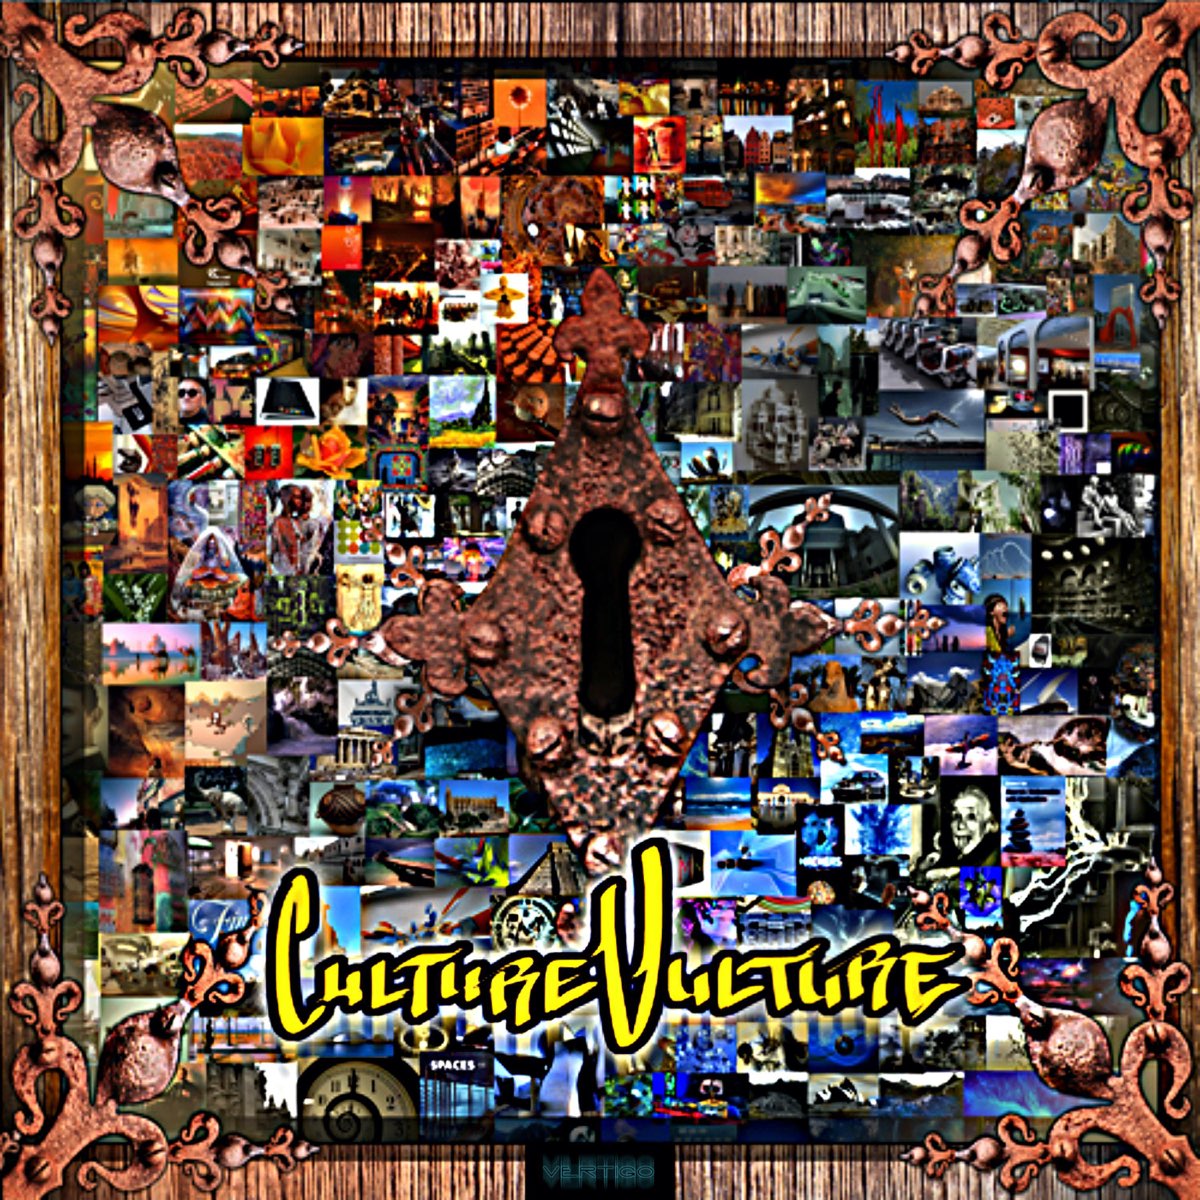 ‎Culture Vulture - Album by Various Artists - Apple Music